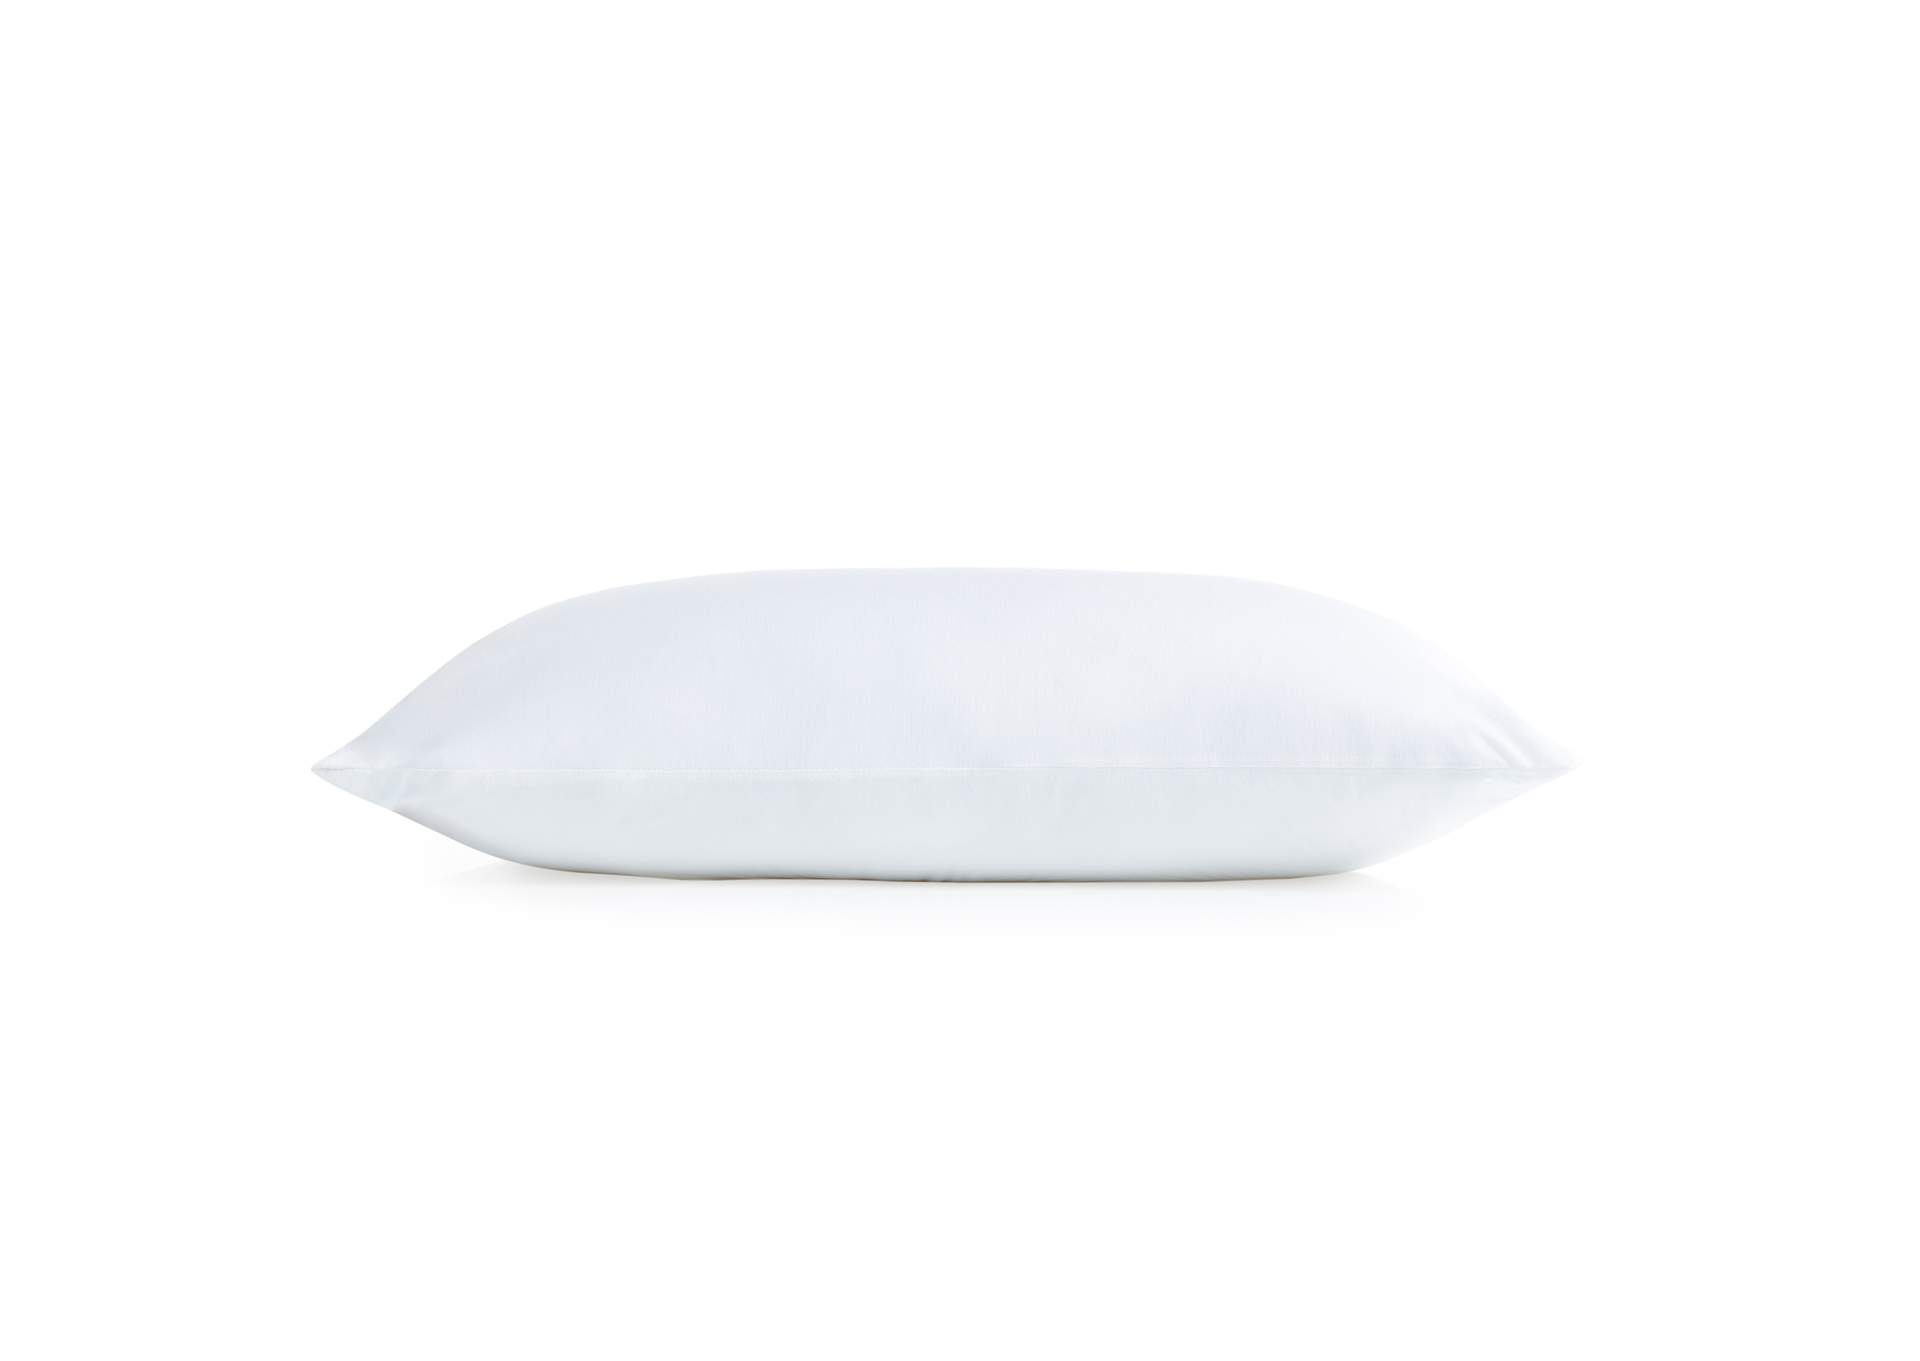 Malouf Encase Omniphase Pillow Protector - King Size,Malouf